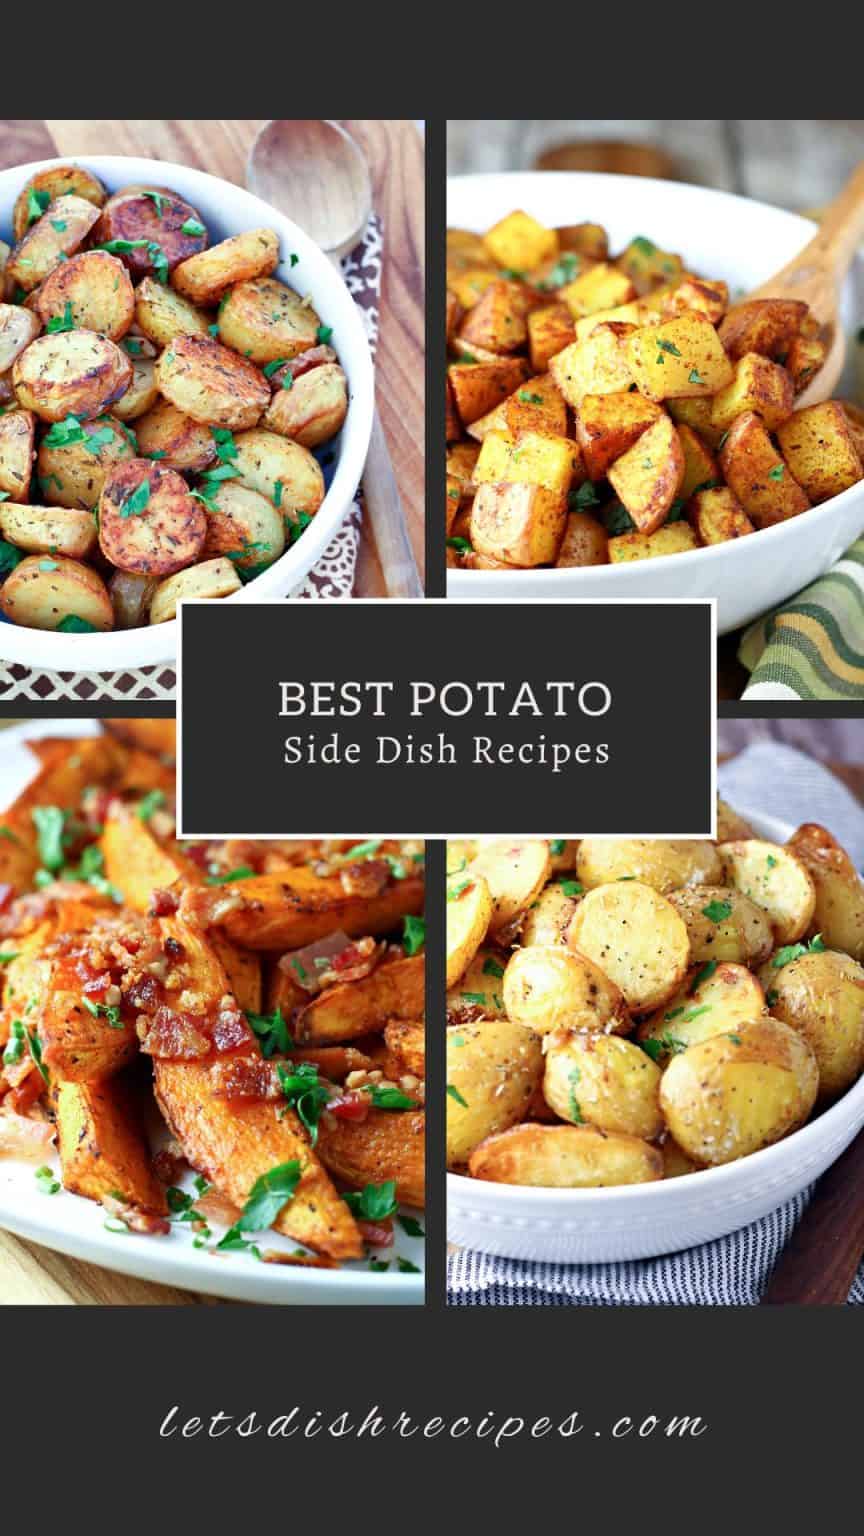 Best Potato Side Dish Recipes — Let's Dish Recipes